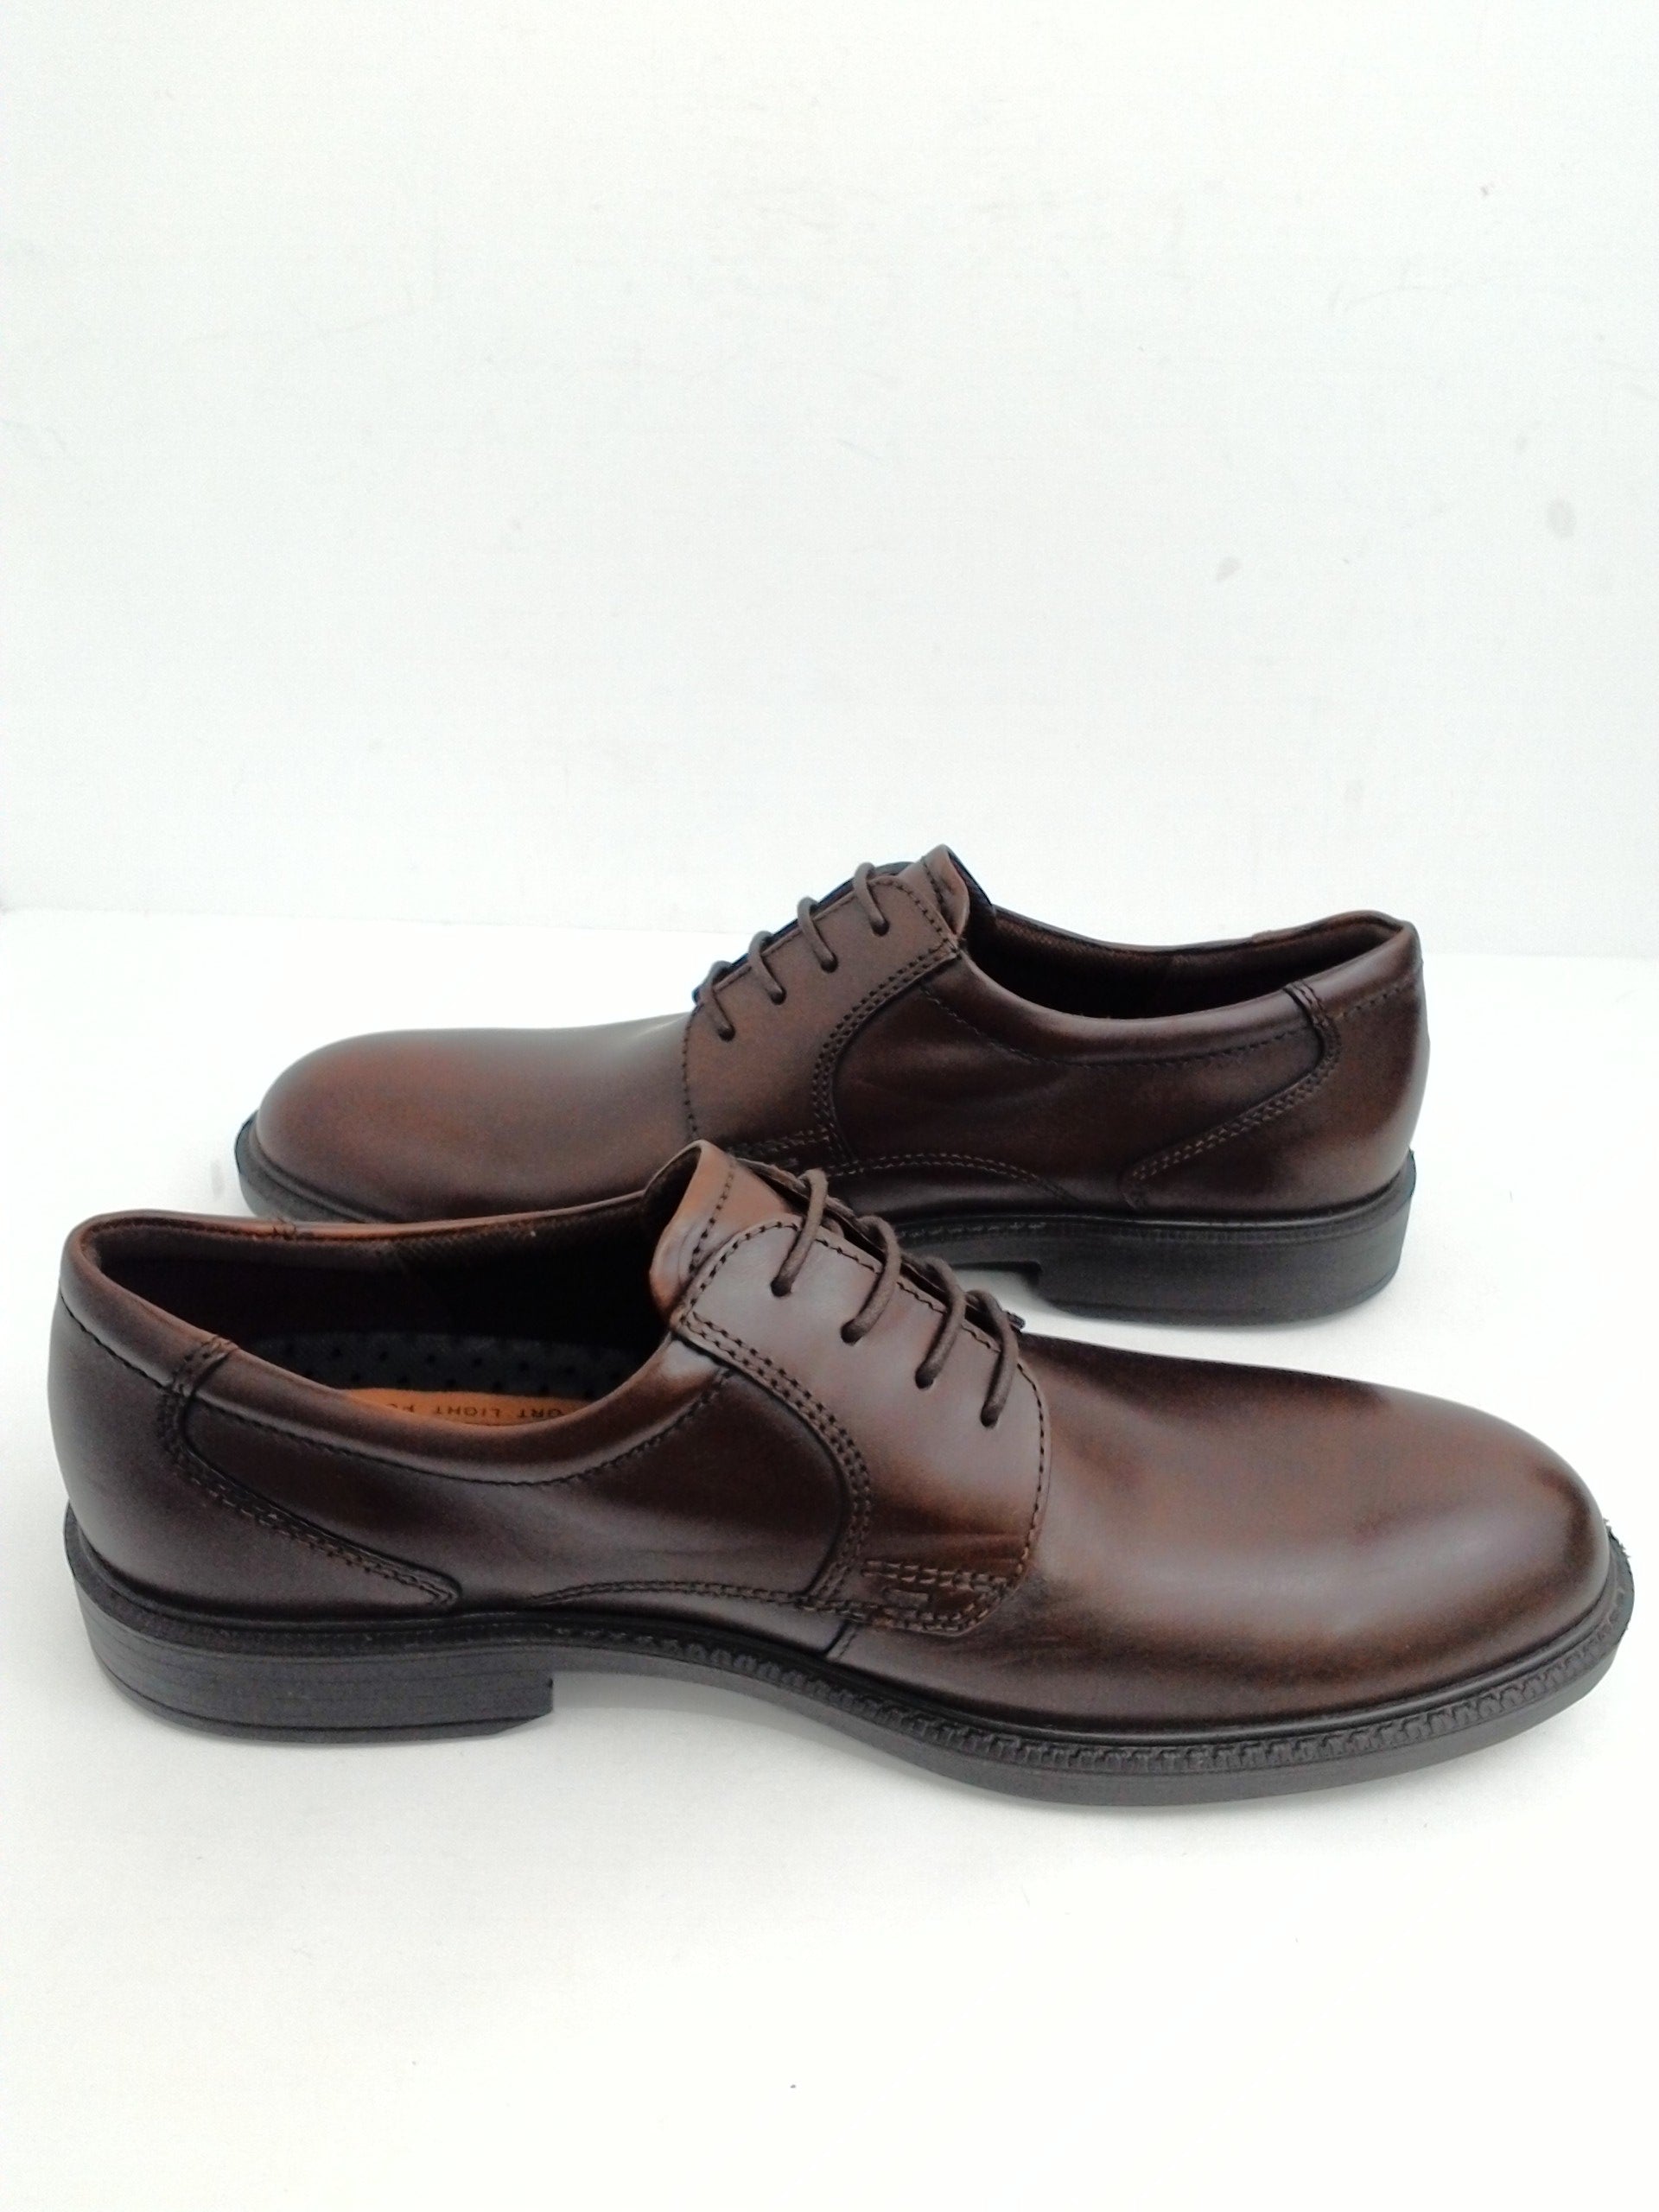 Ecco Men's Plain-Toe Oxfords , Leather, Dark Brown, Size 13 M (47 ...